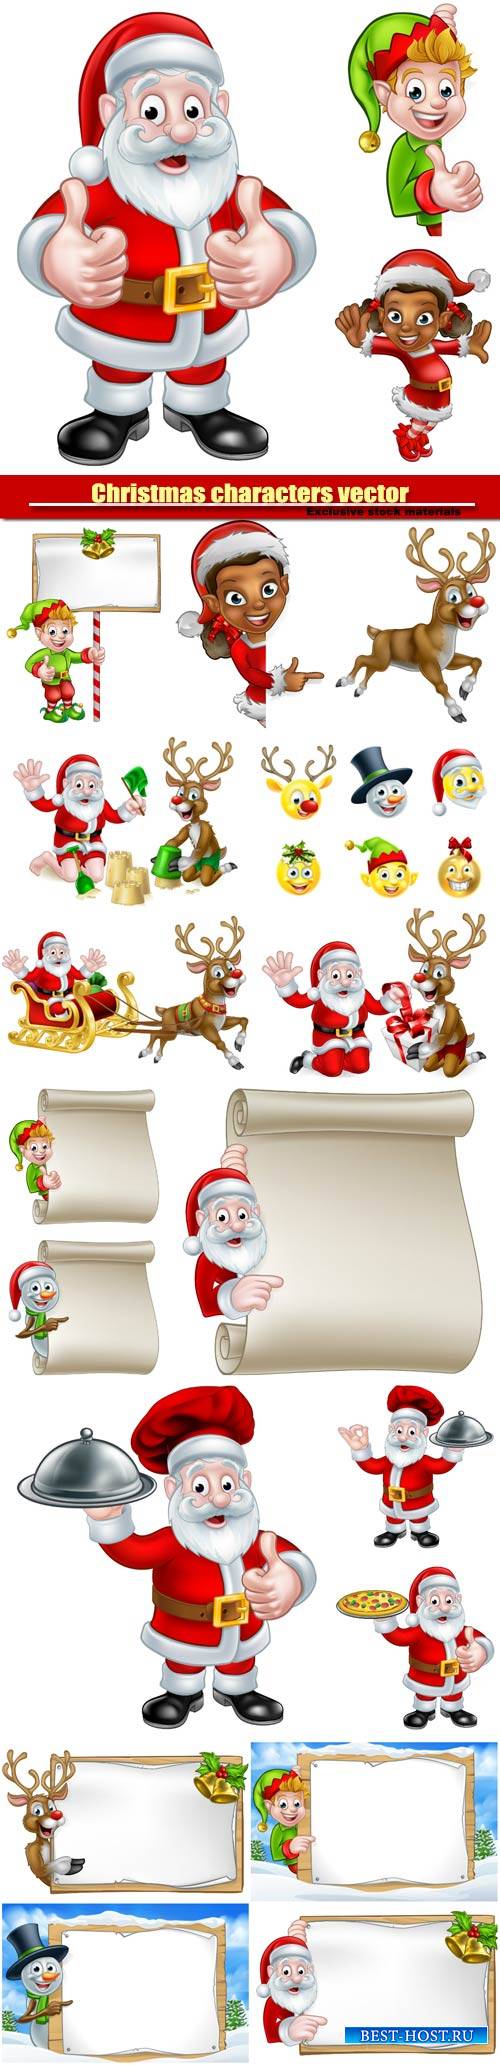 Christmas characters vector, Santa and elves